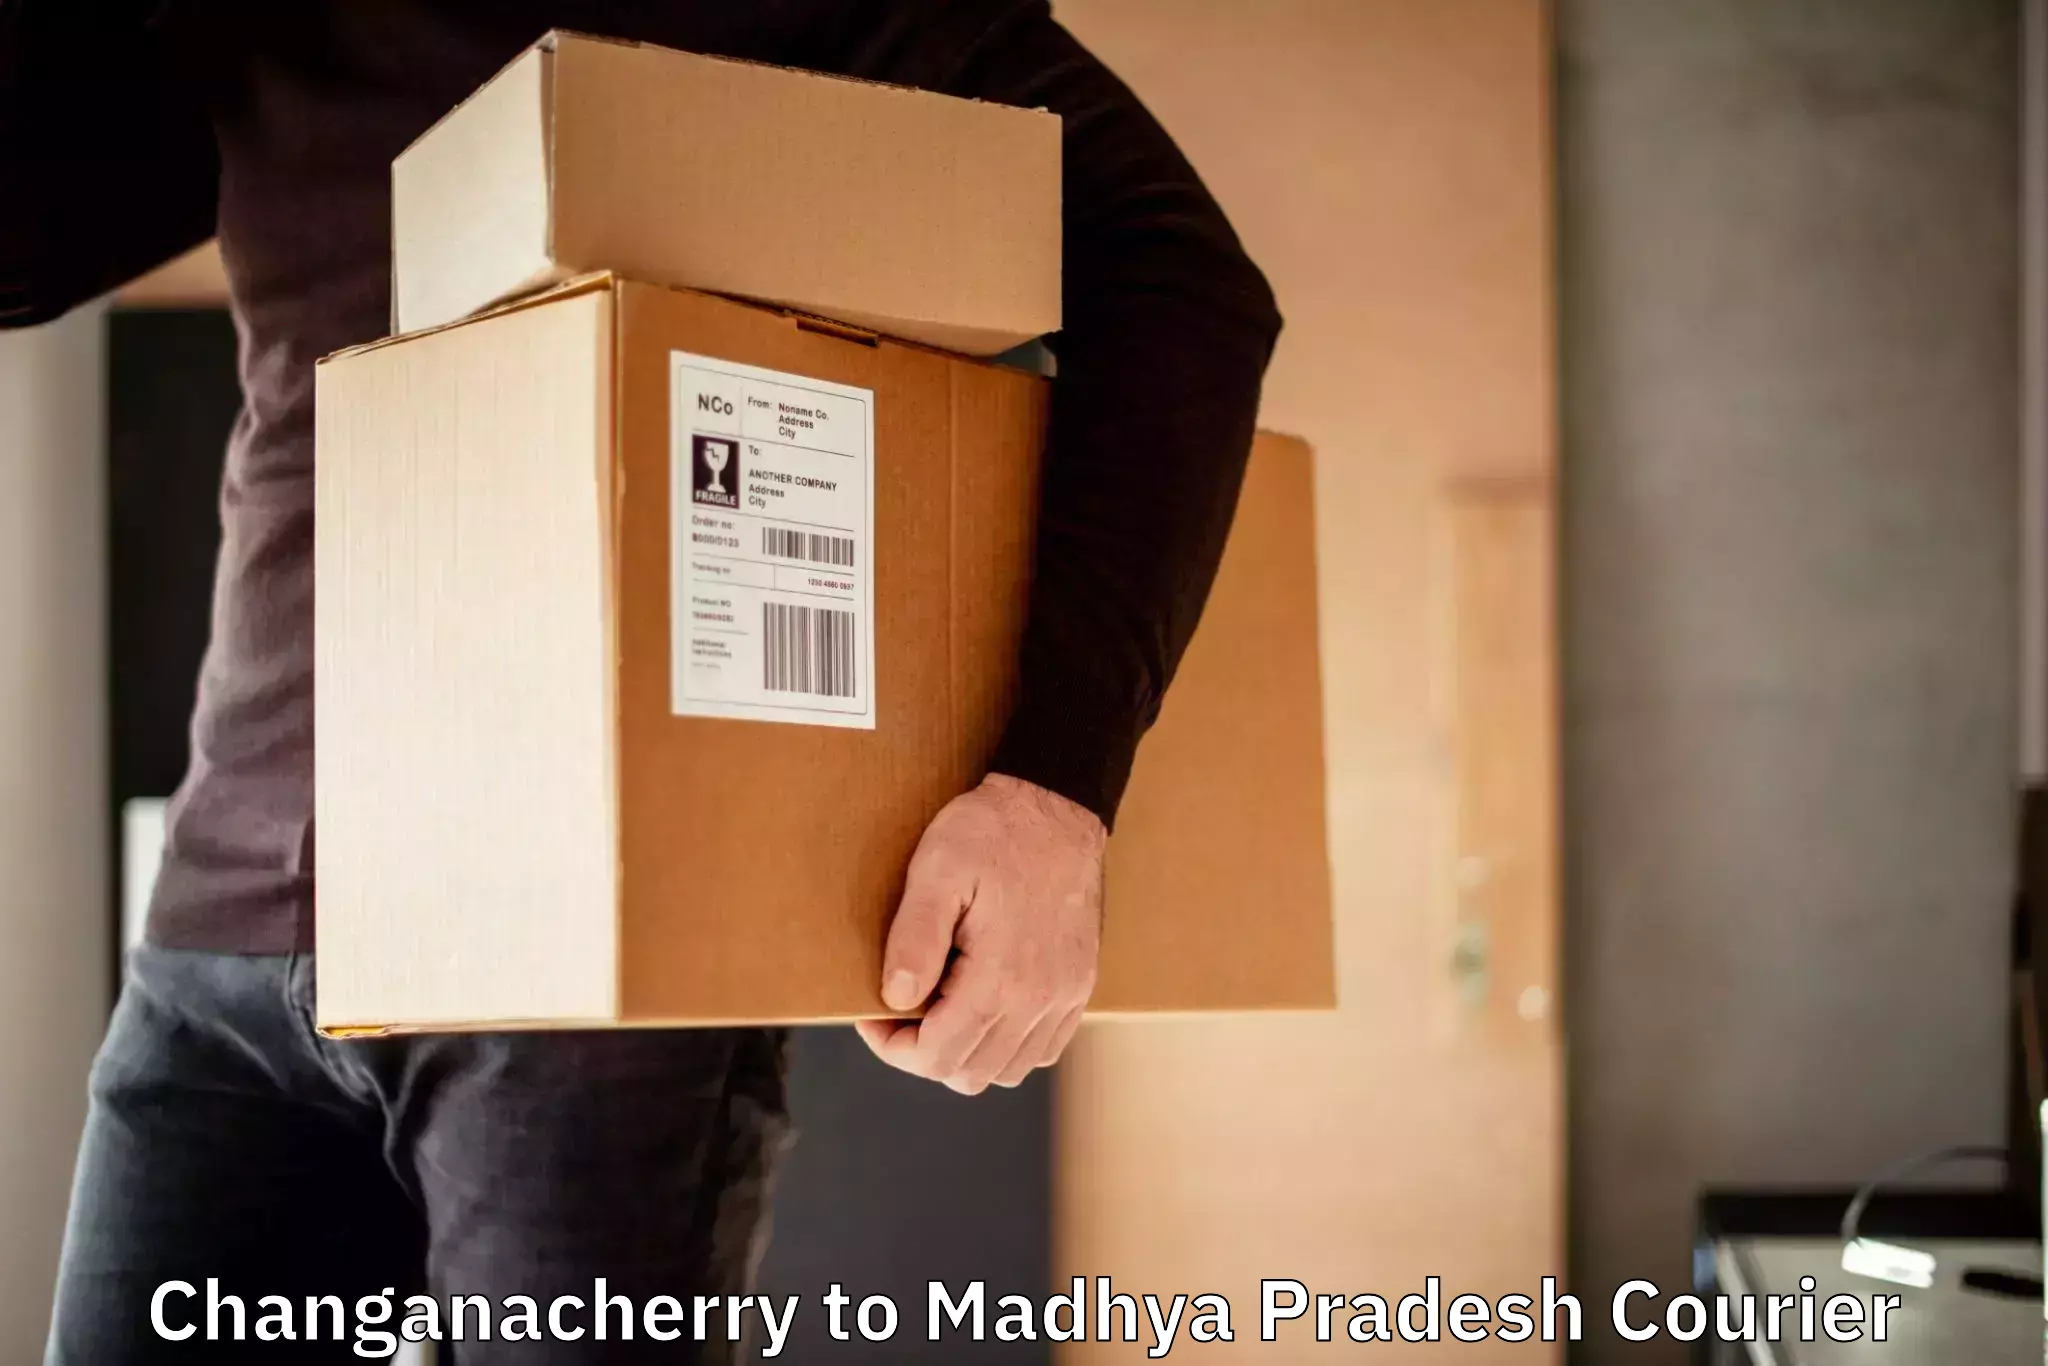 Package delivery network Changanacherry to Bichhiya